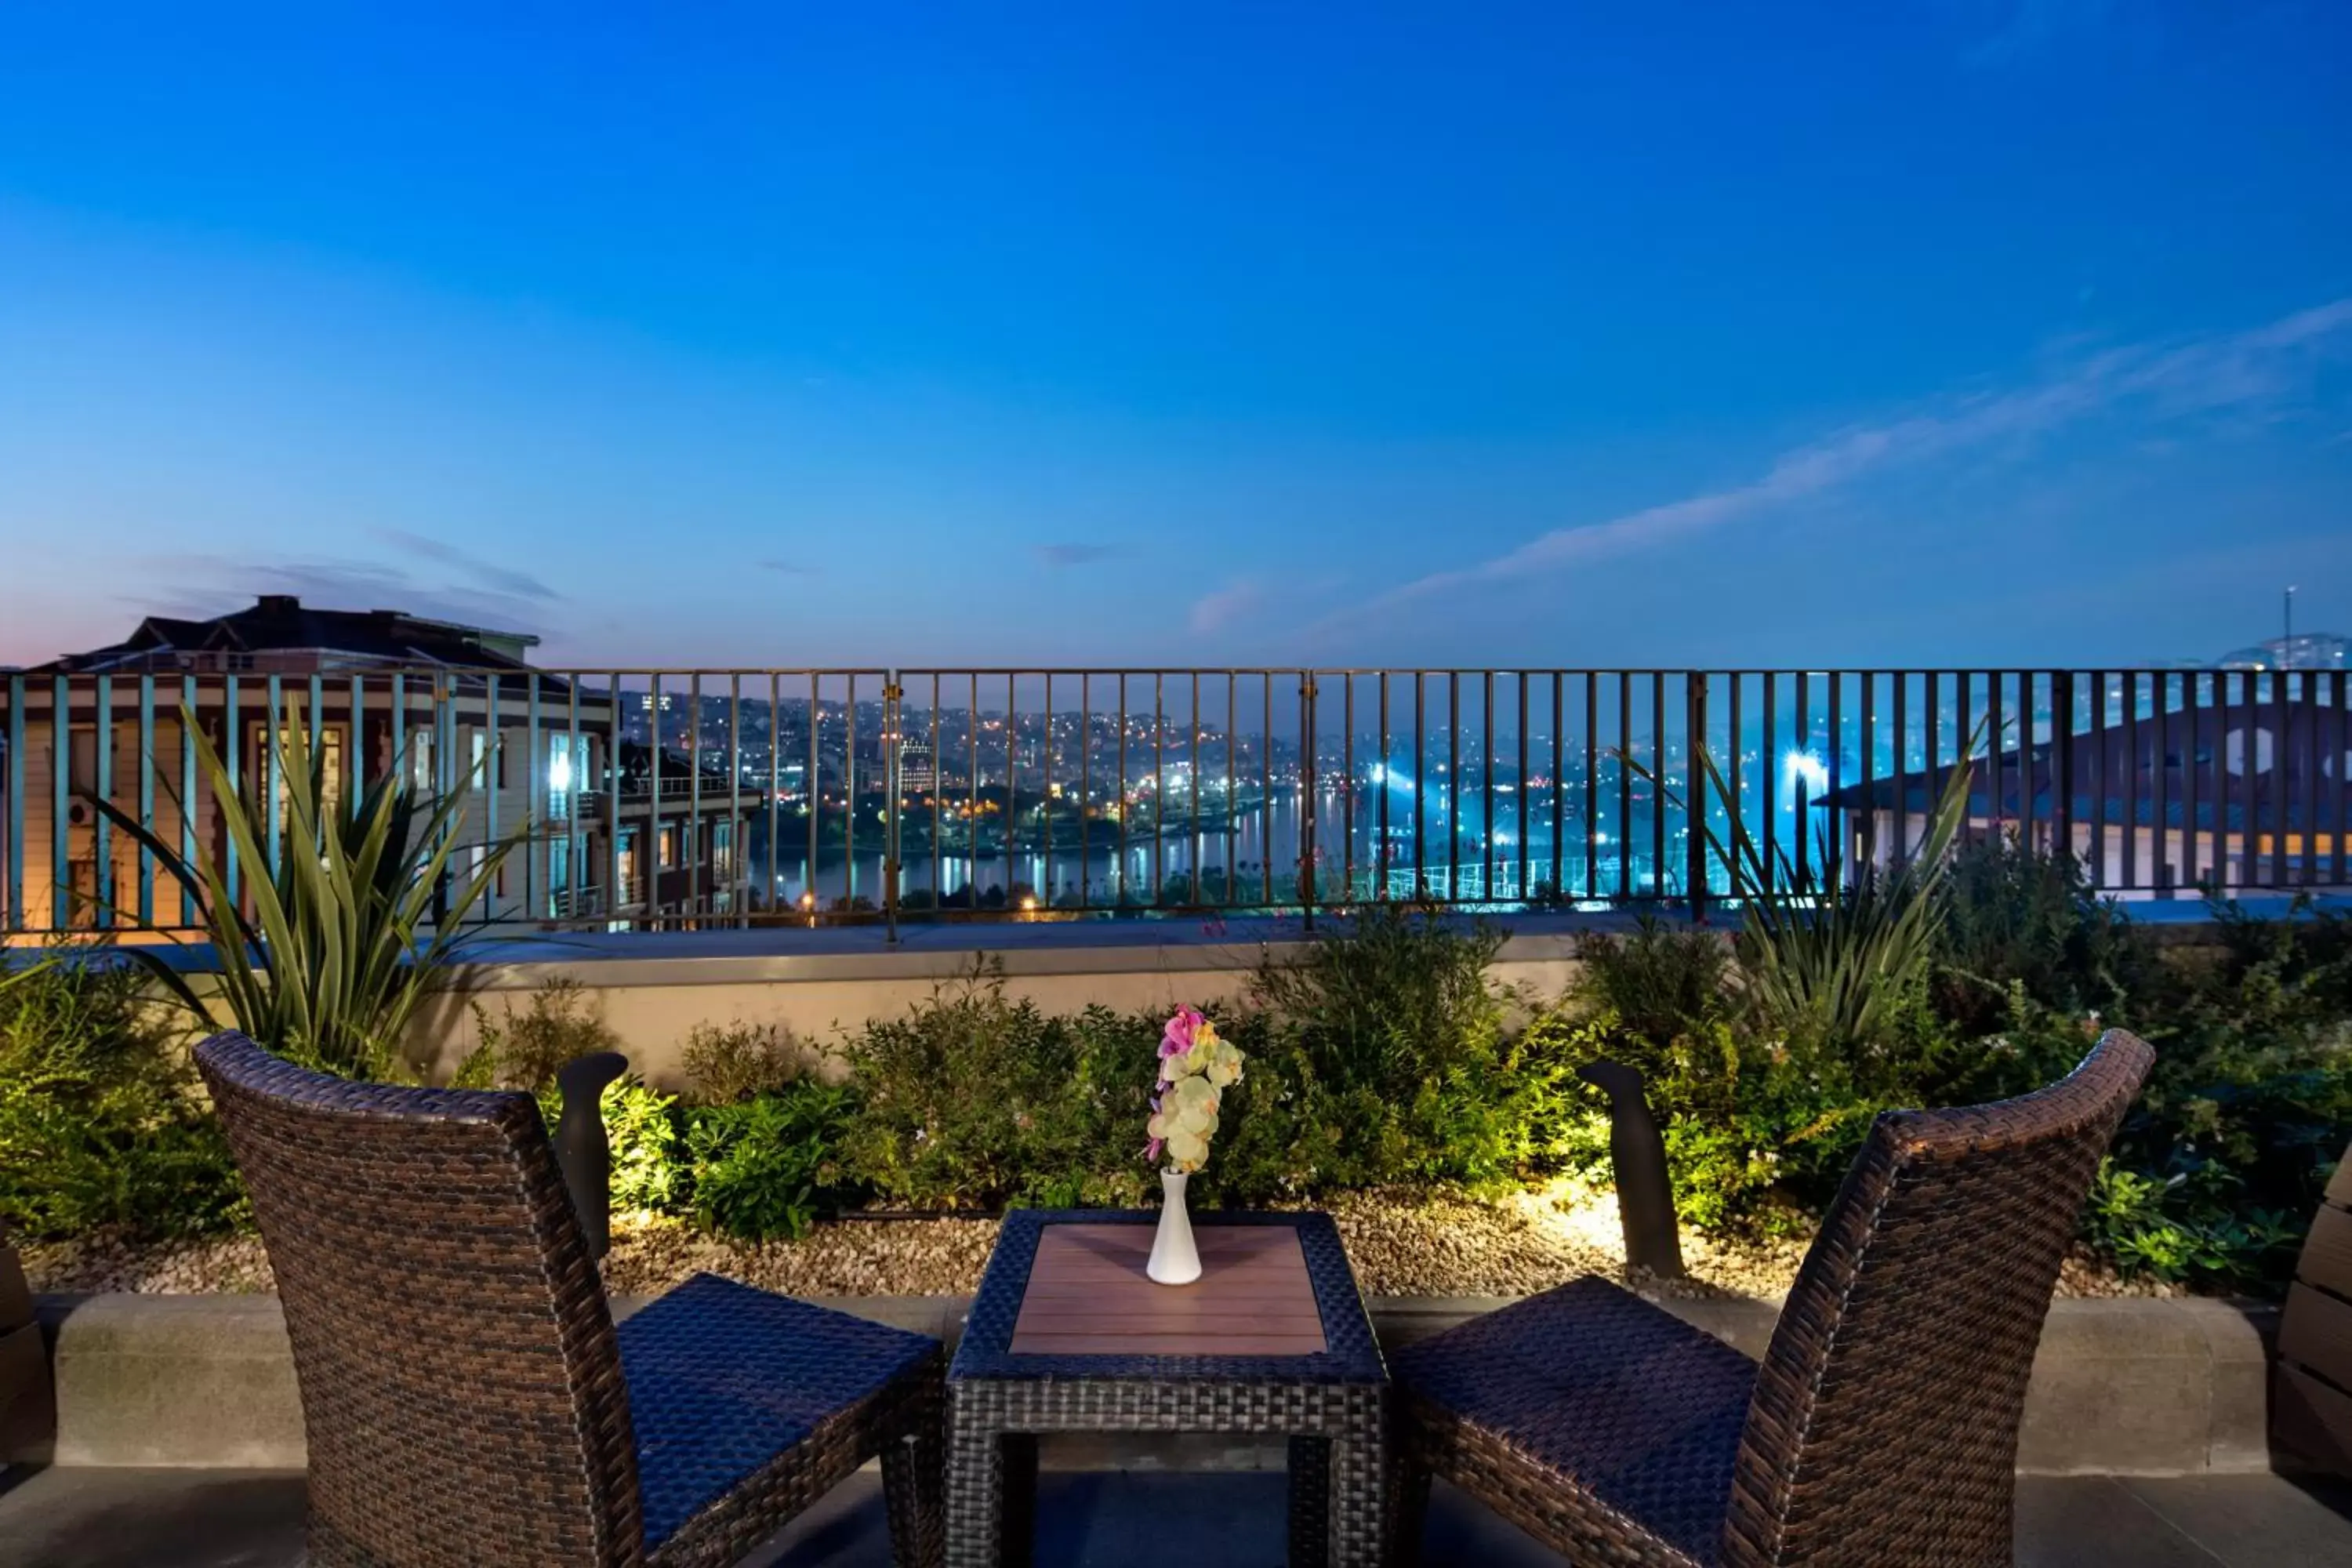 Balcony/Terrace in Dosso Dossi Hotels Golden Horn